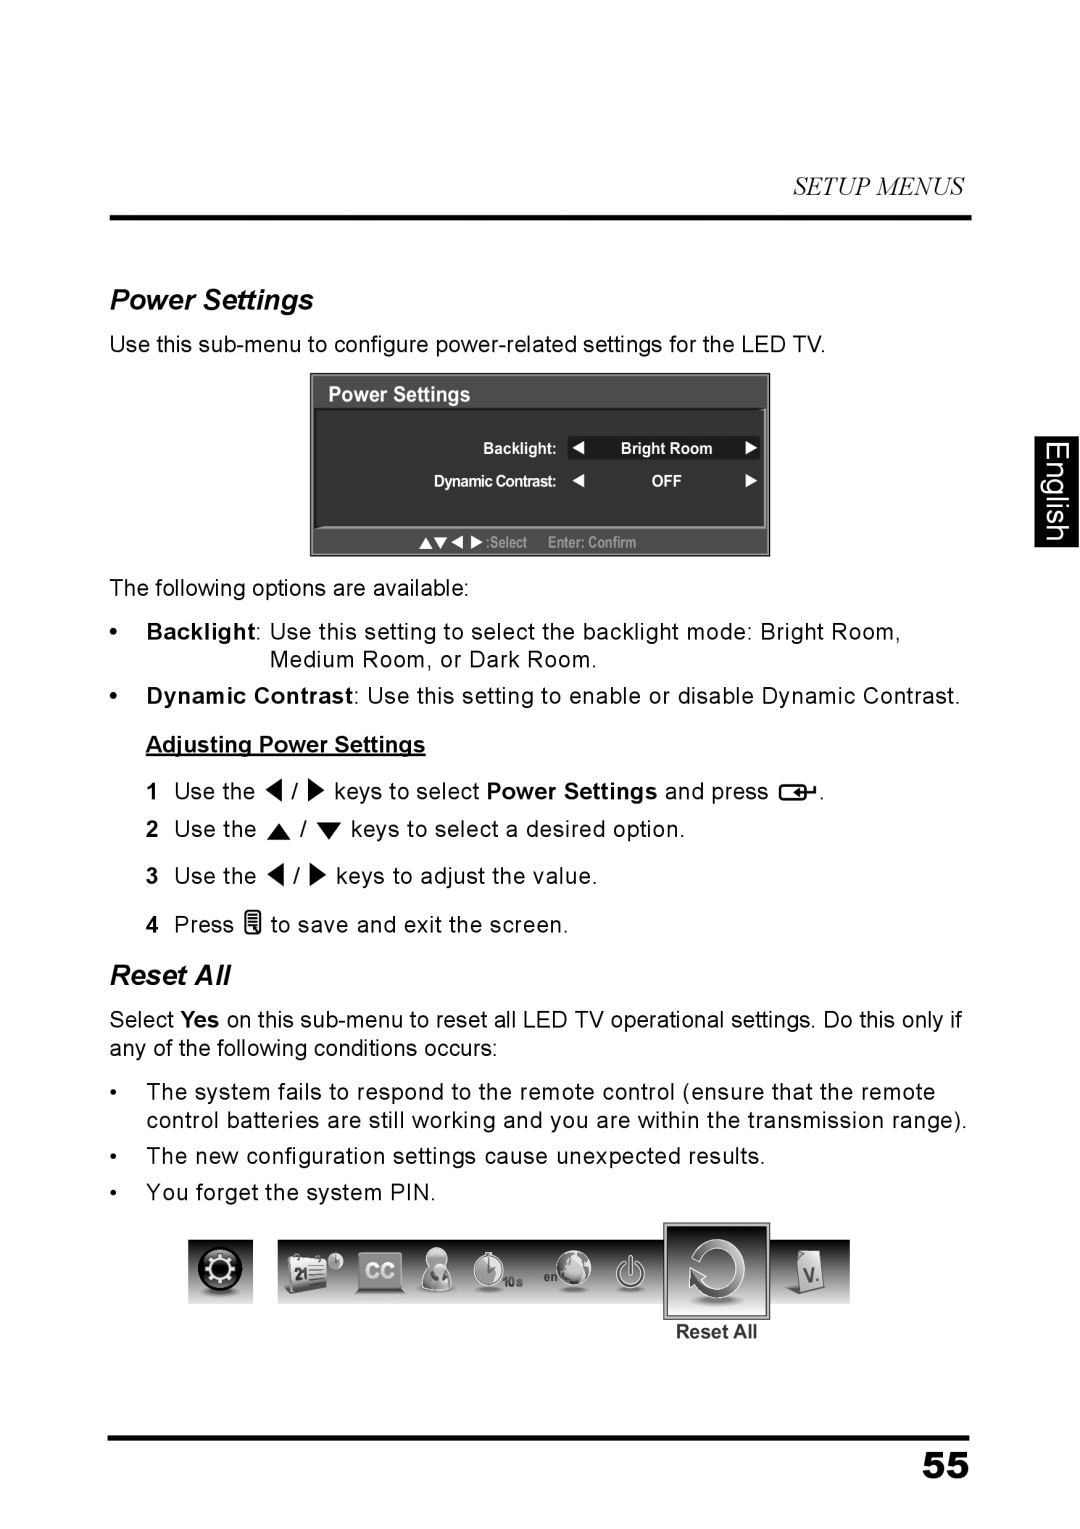 Westinghouse LD-3237 user manual Reset All, English, Setup Menus, Adjusting Power Settings 